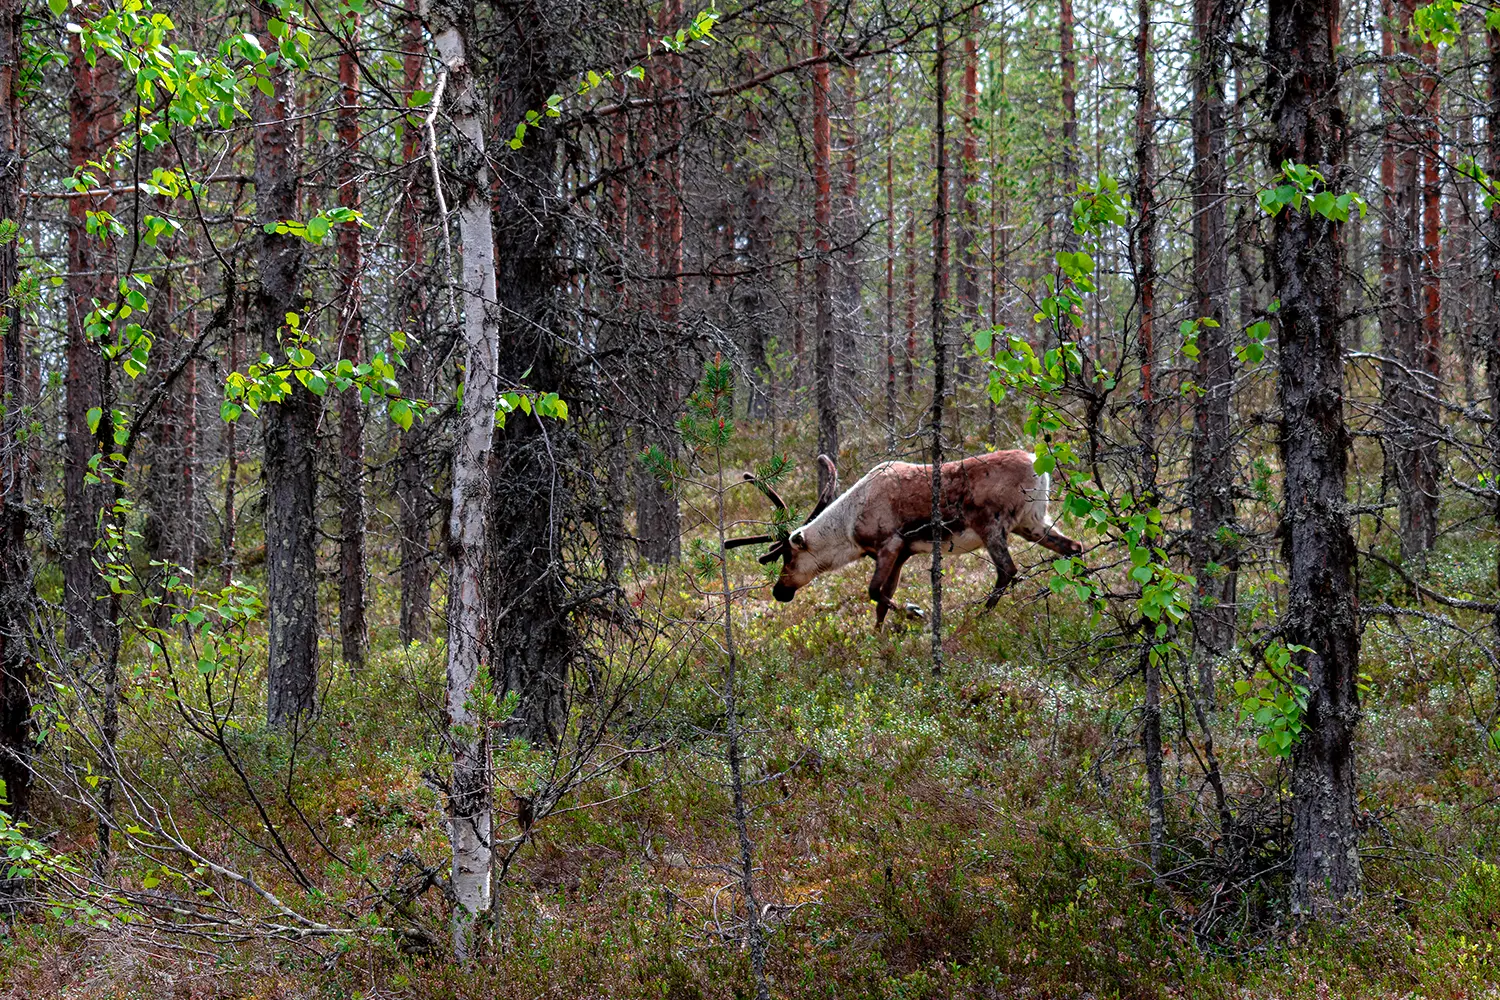 Reindeer in the forest. Shot in Northern Sweden in Sonfjallets national park.